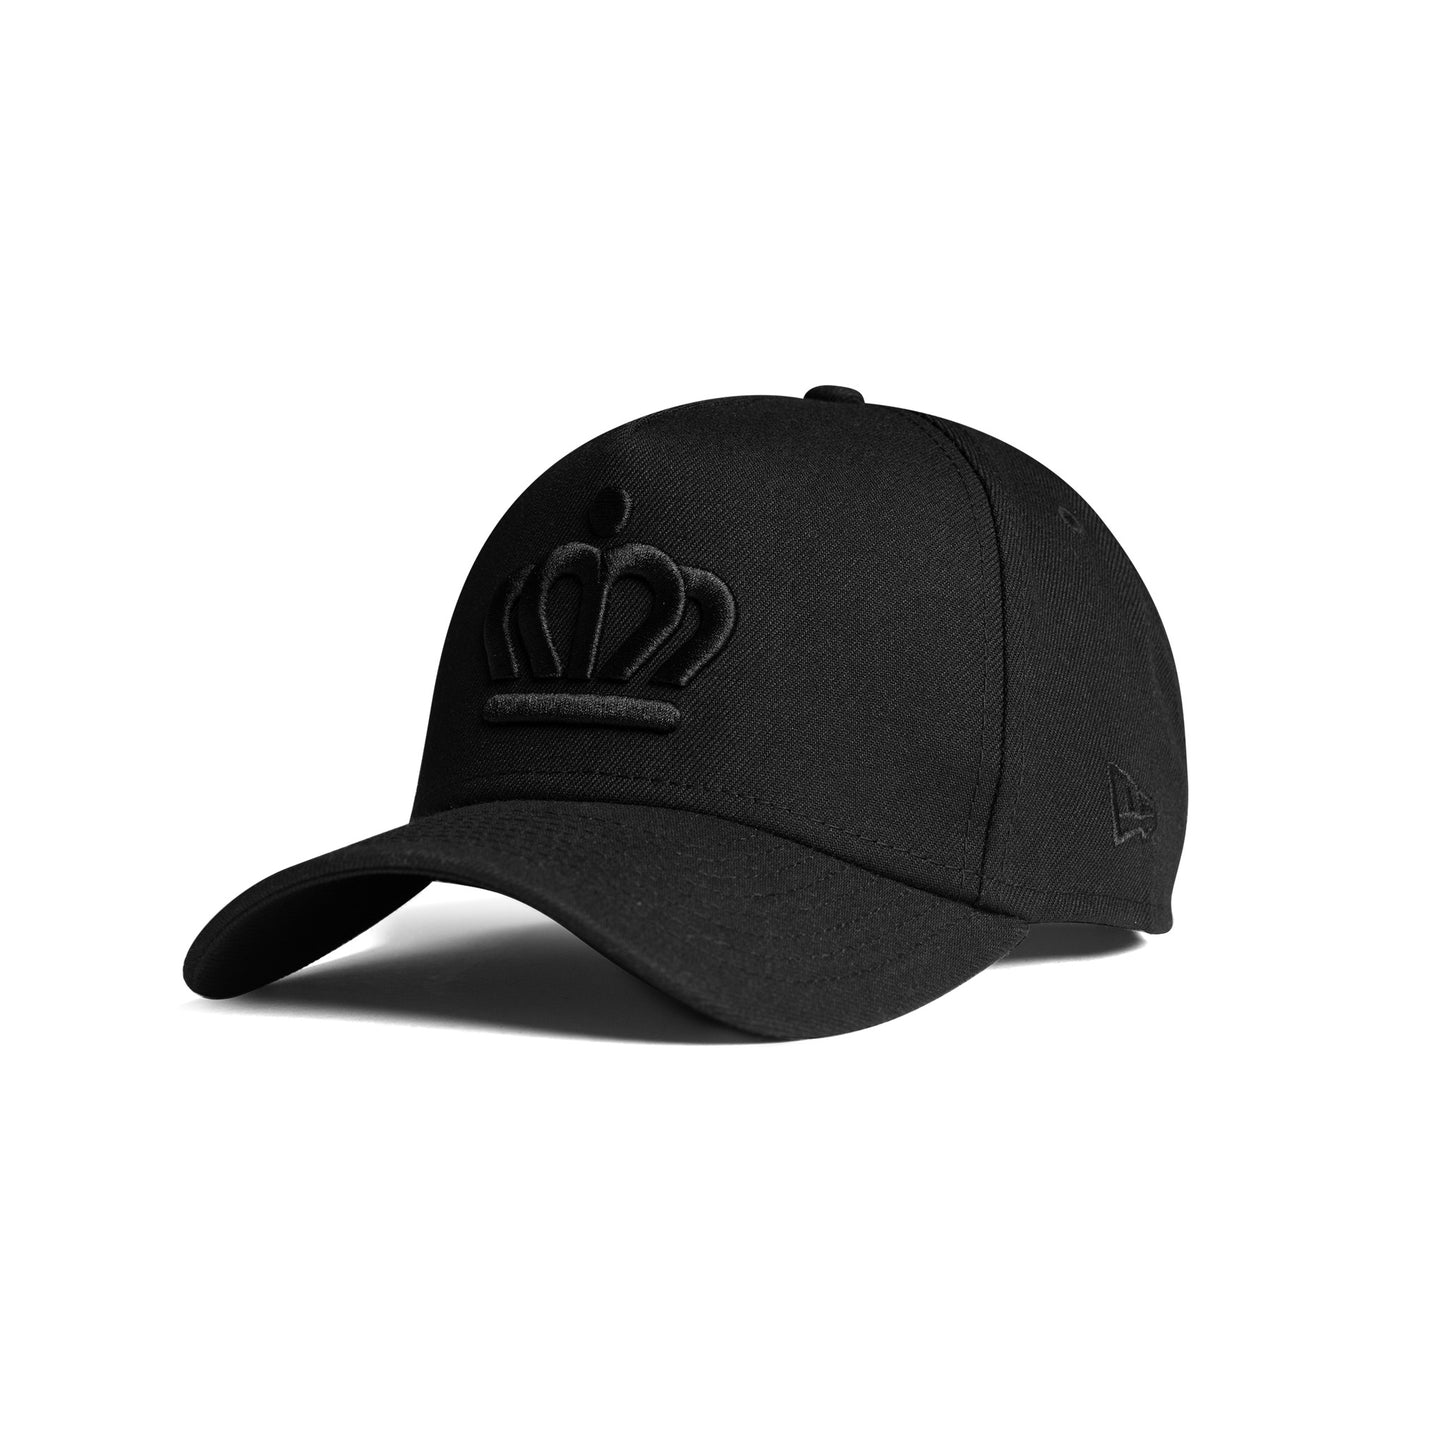 704 Shop x New Era x City of Charlotte Official Crown 940 A-Frame Hat - Black/Black